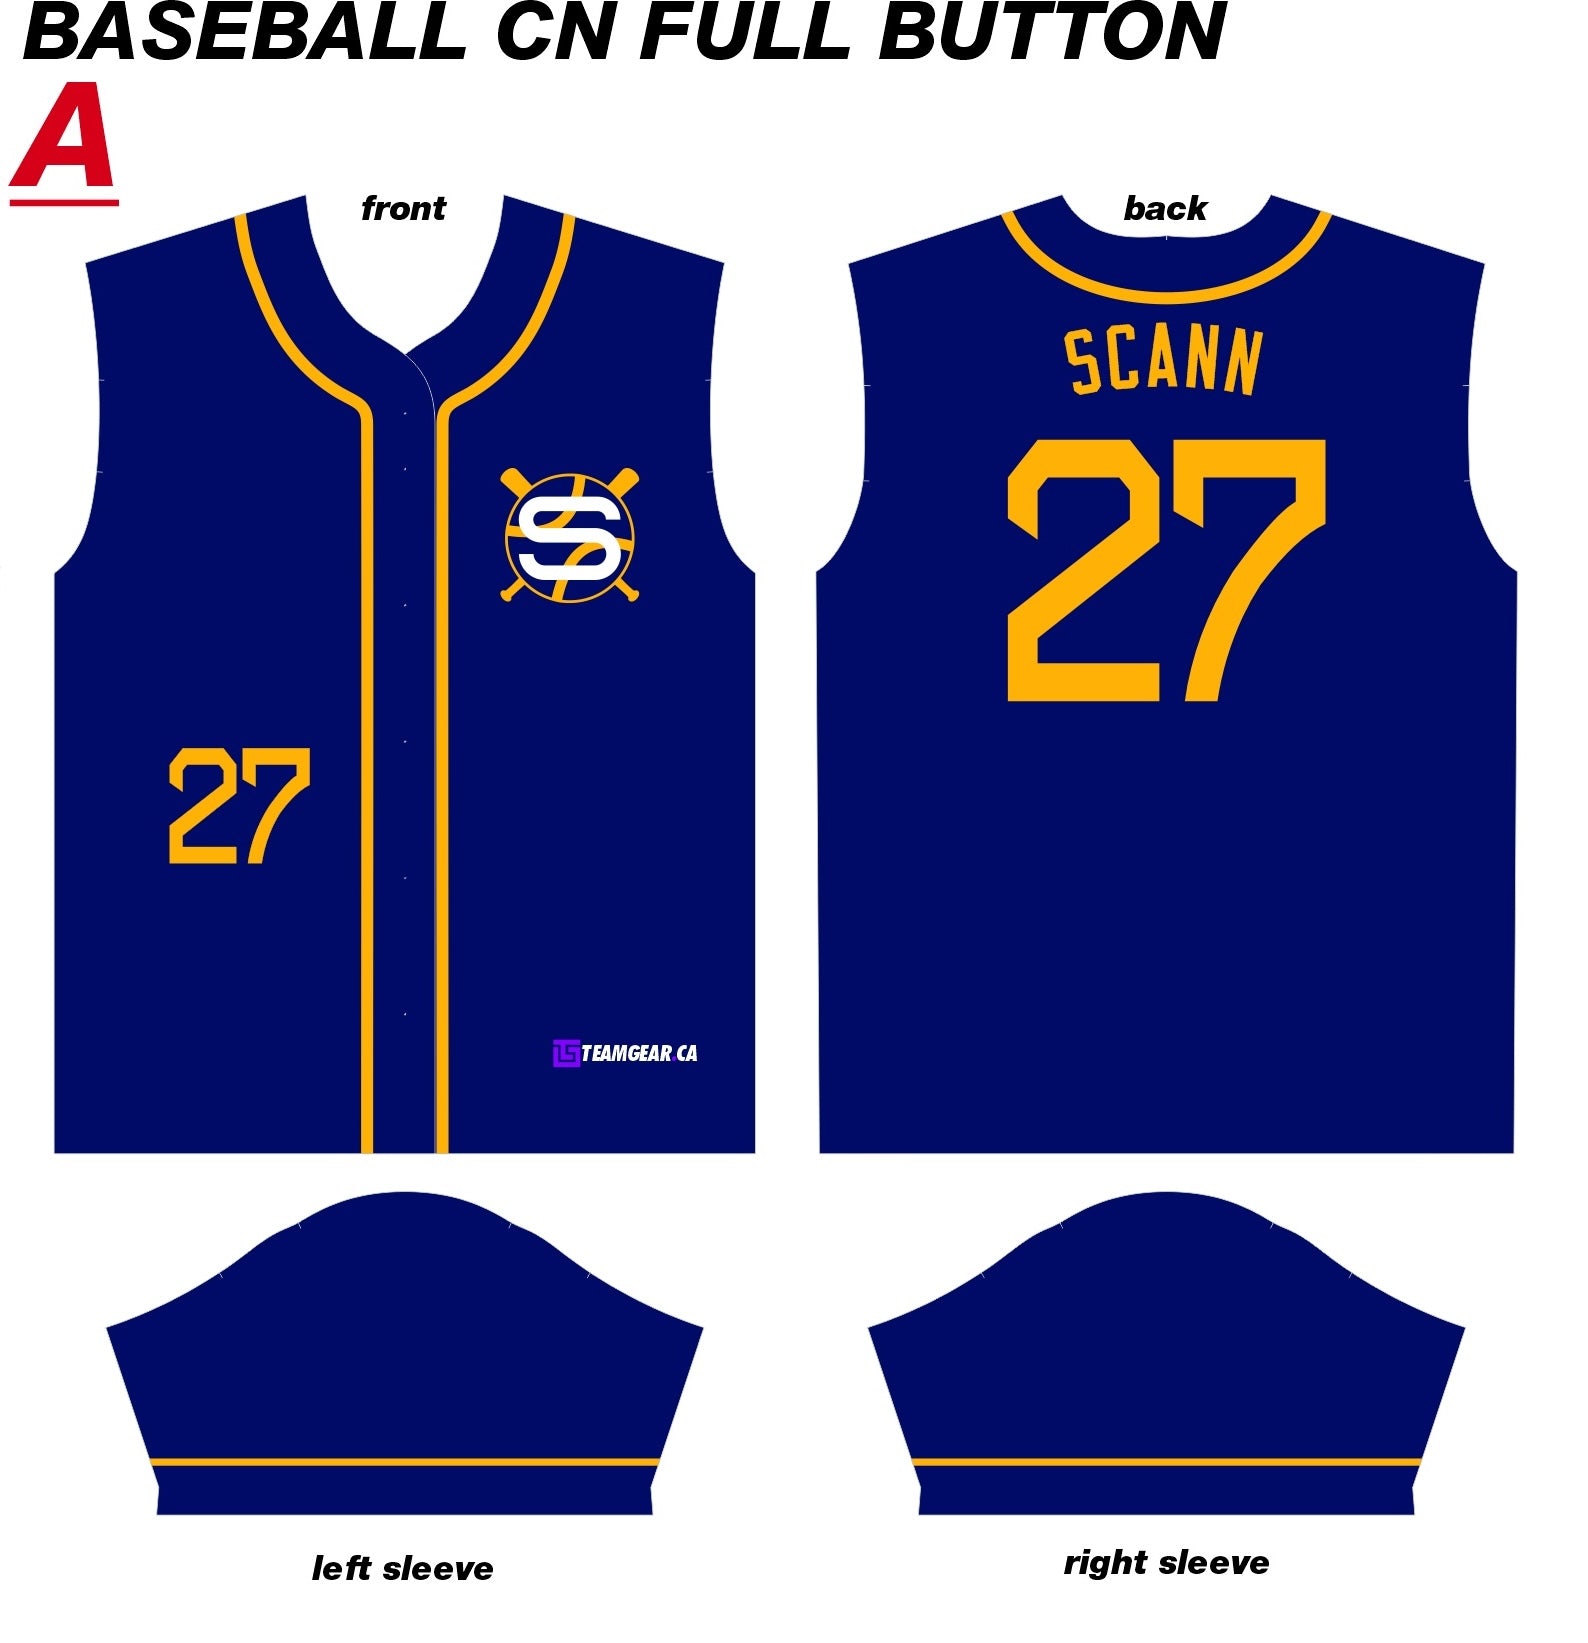 custom full button jersey design for ShowZone creator Scann